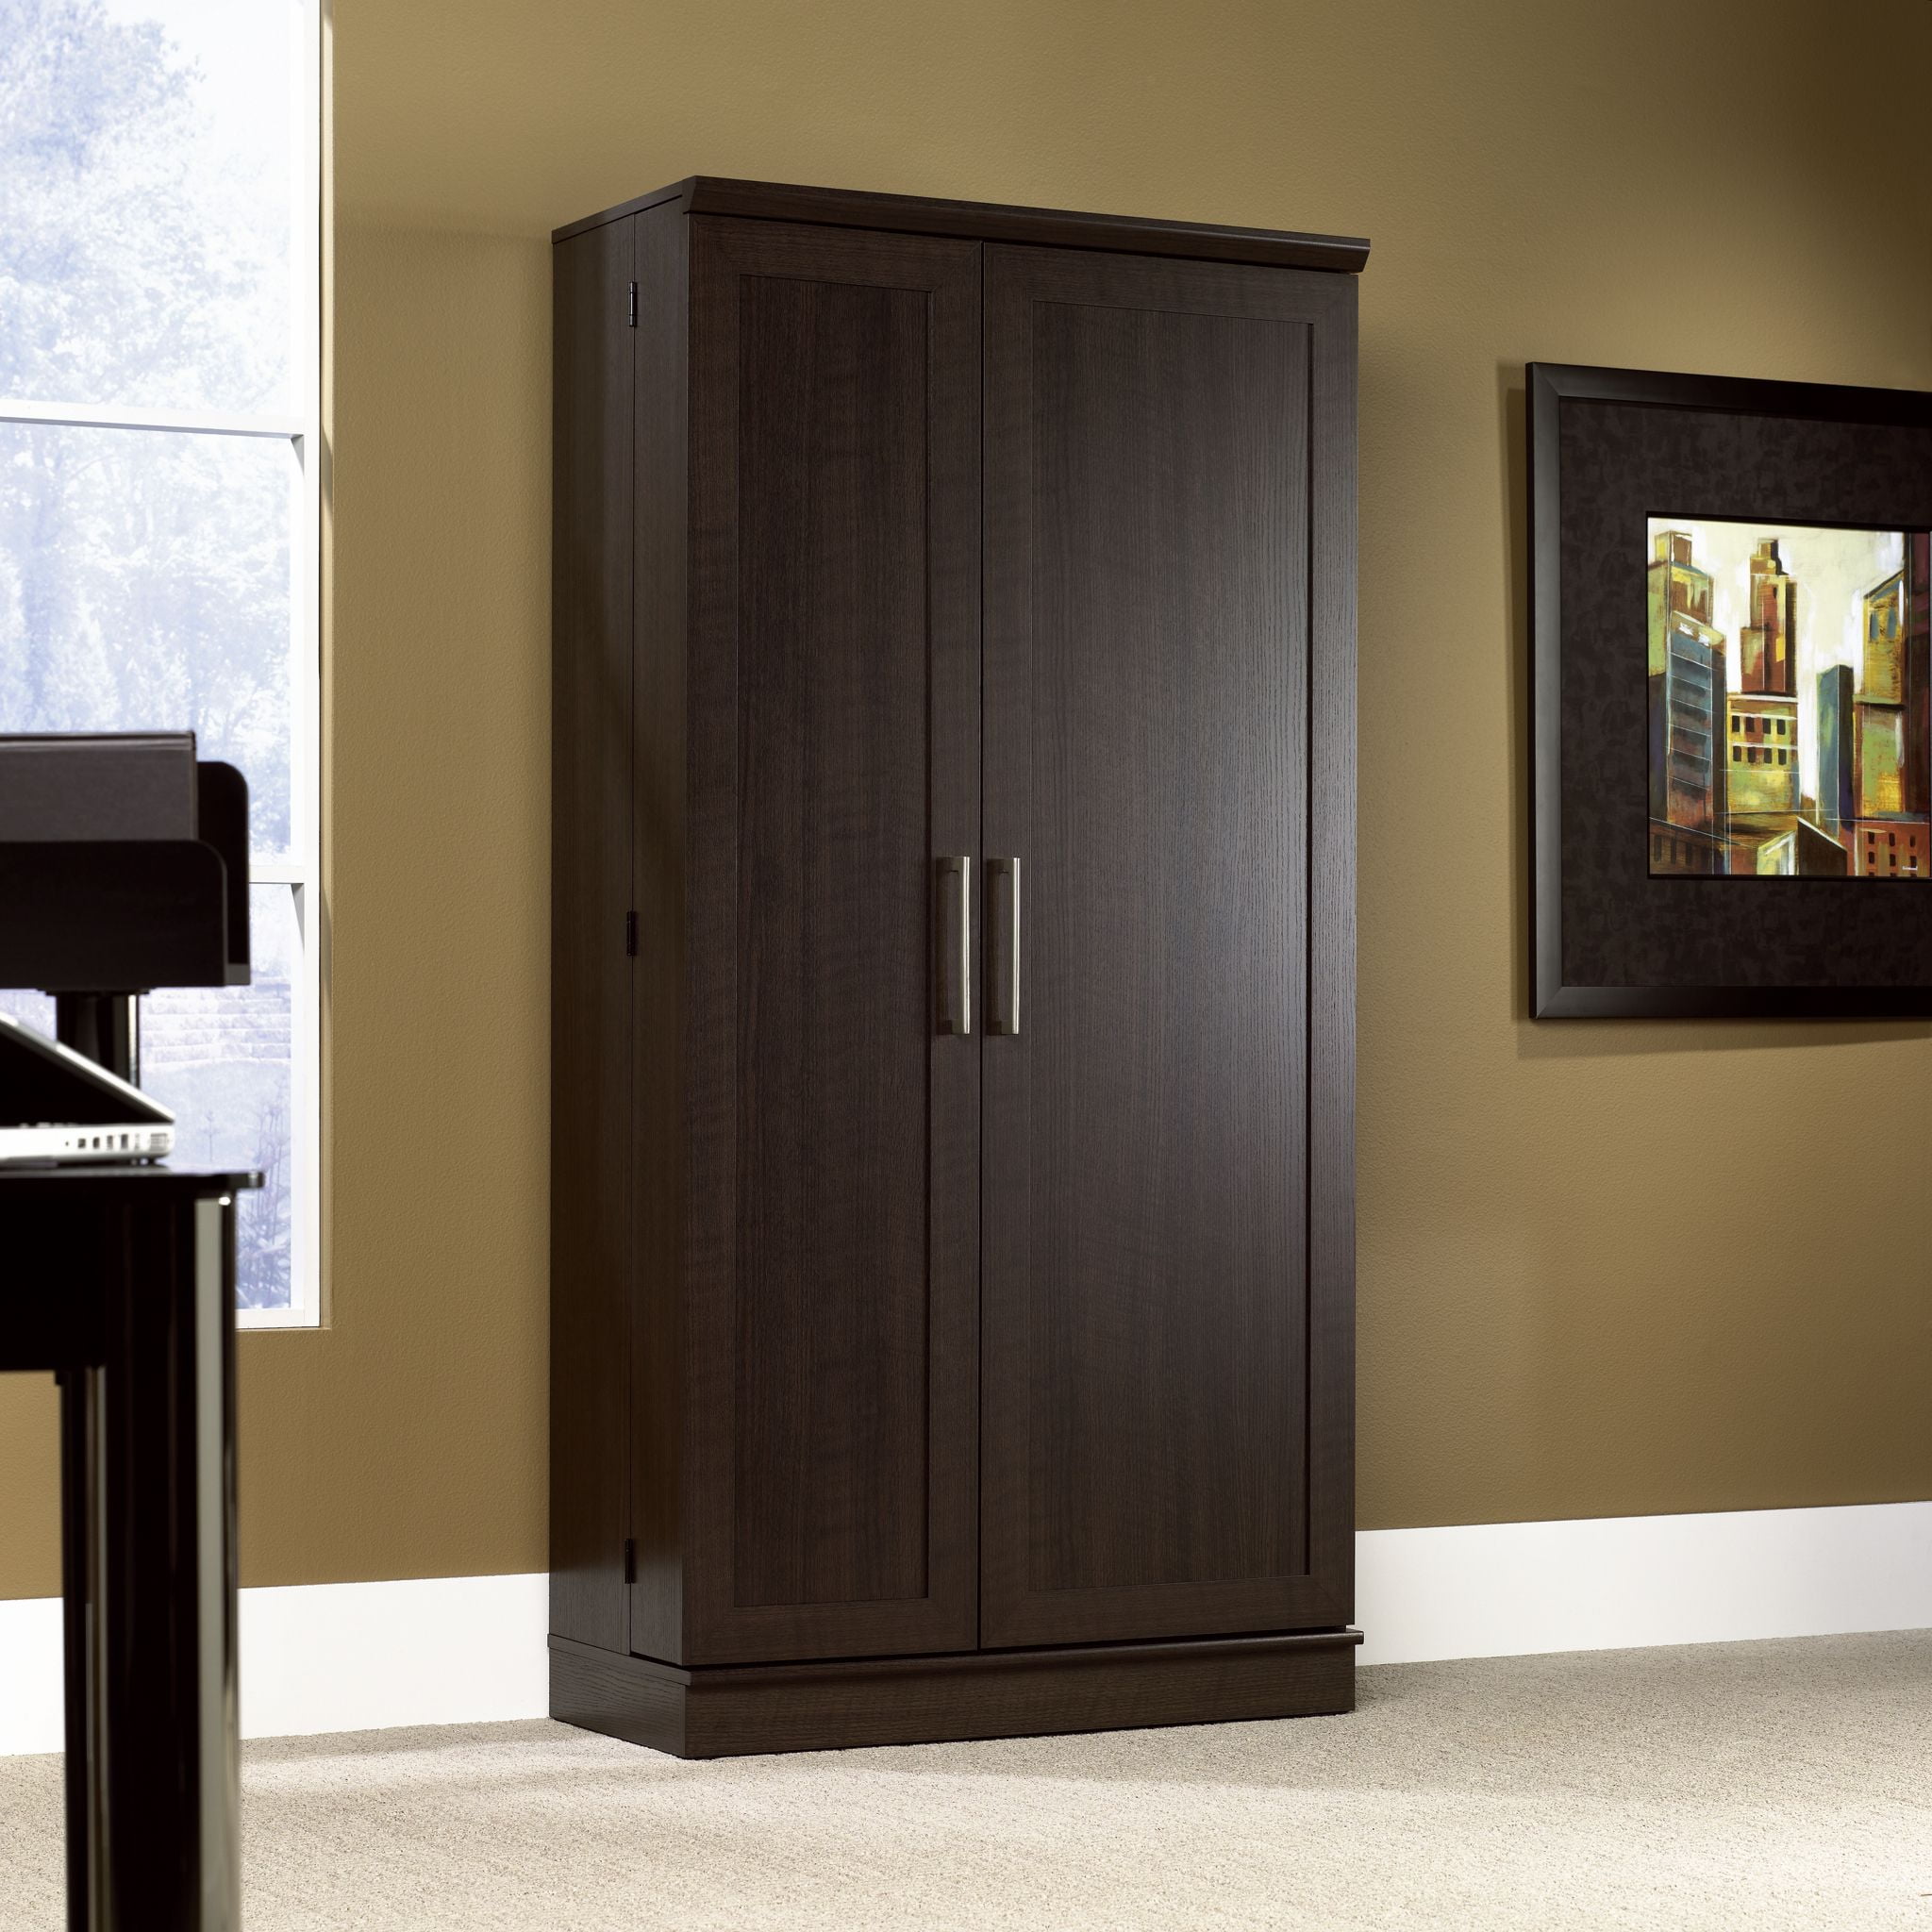 Sauder HomePlus Storage Cabinet, Dakota Oak® finish (# 411572)